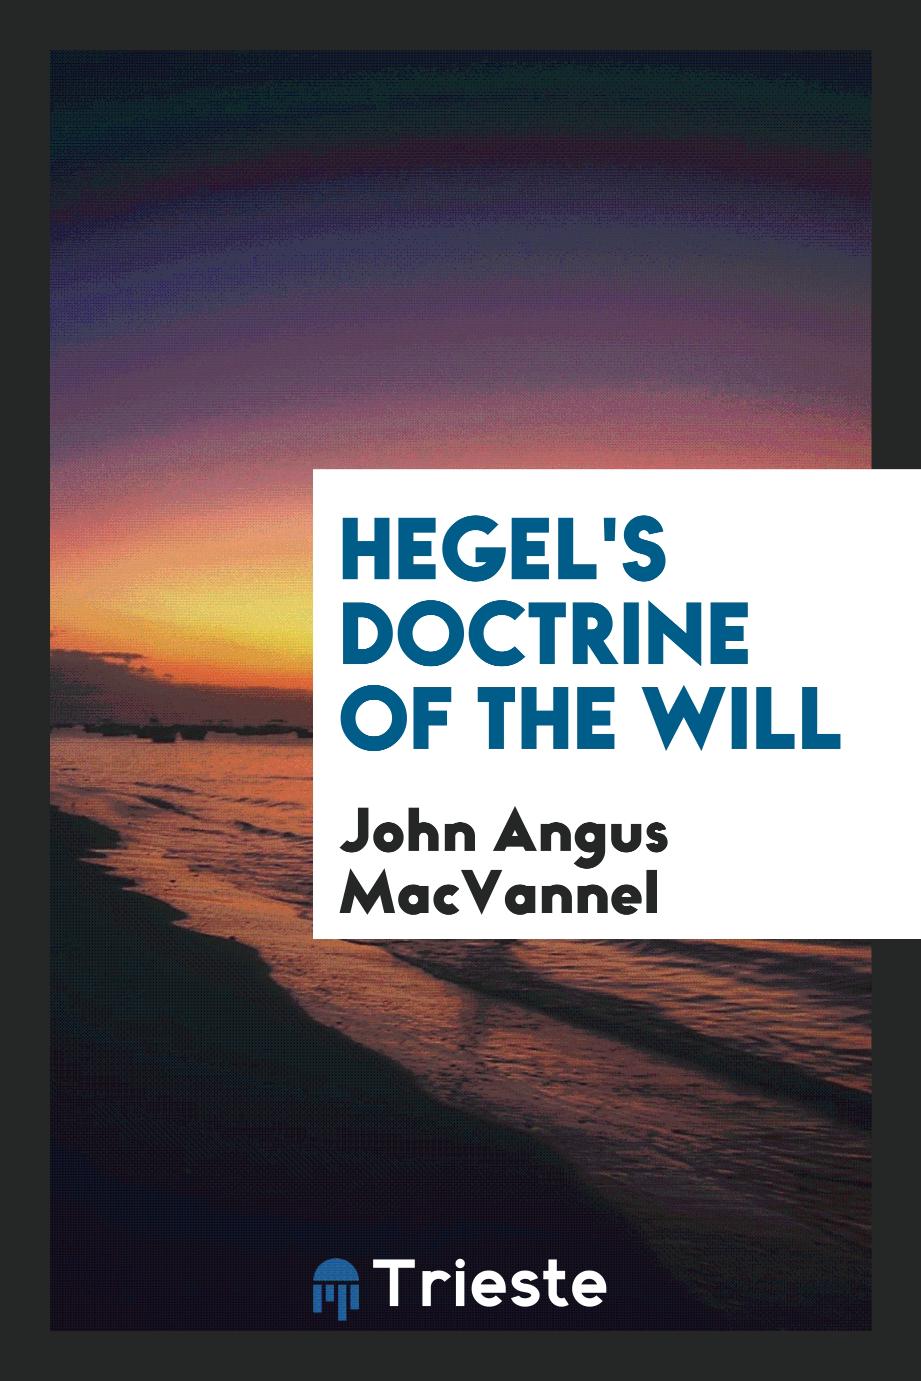 Hegel's Doctrine of the Will